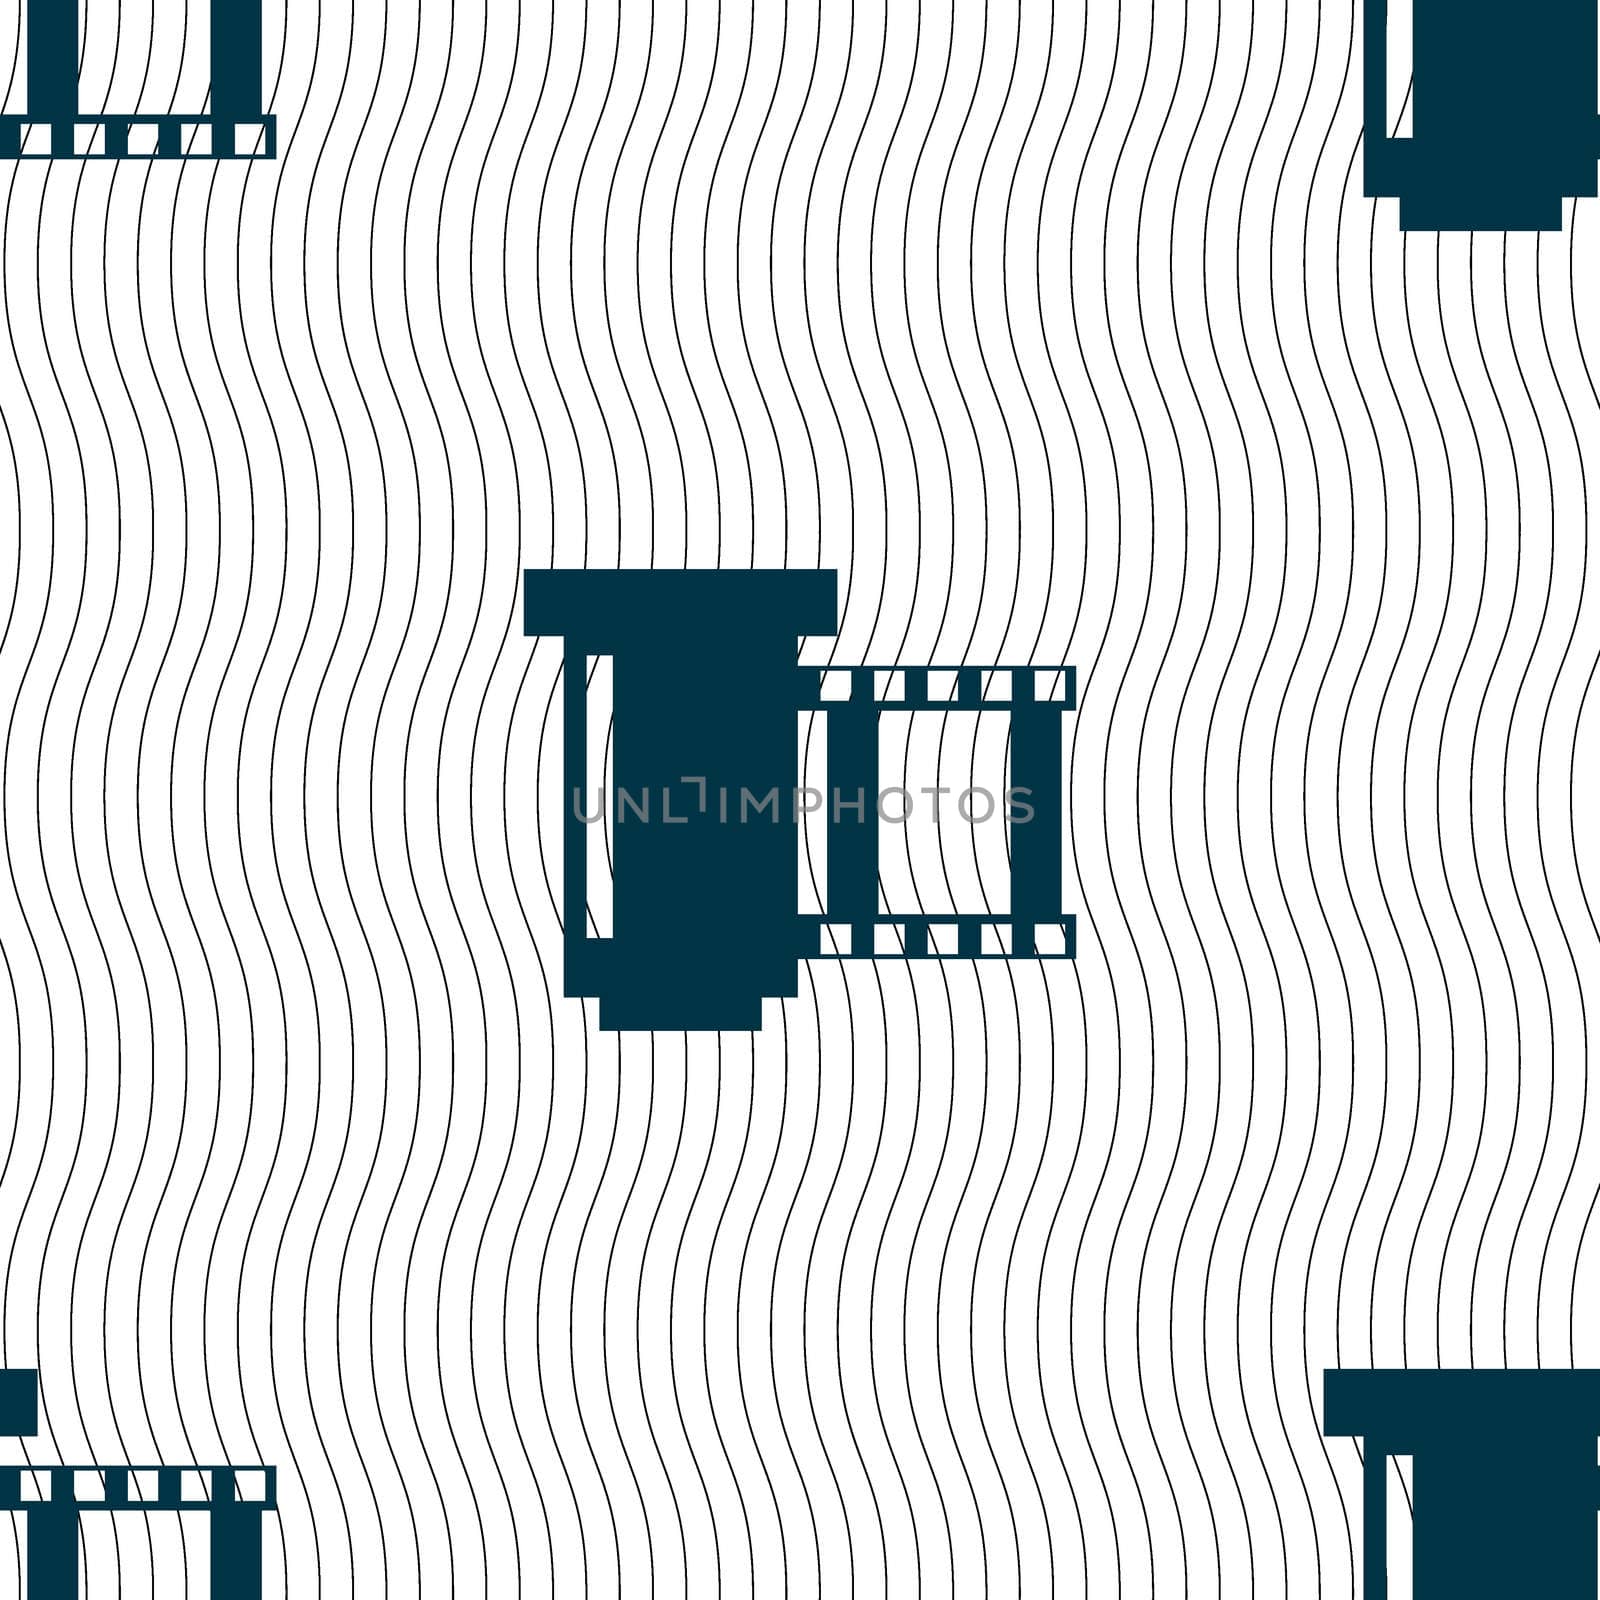 negative films icon symbol.. Seamless pattern with geometric texture. illustration